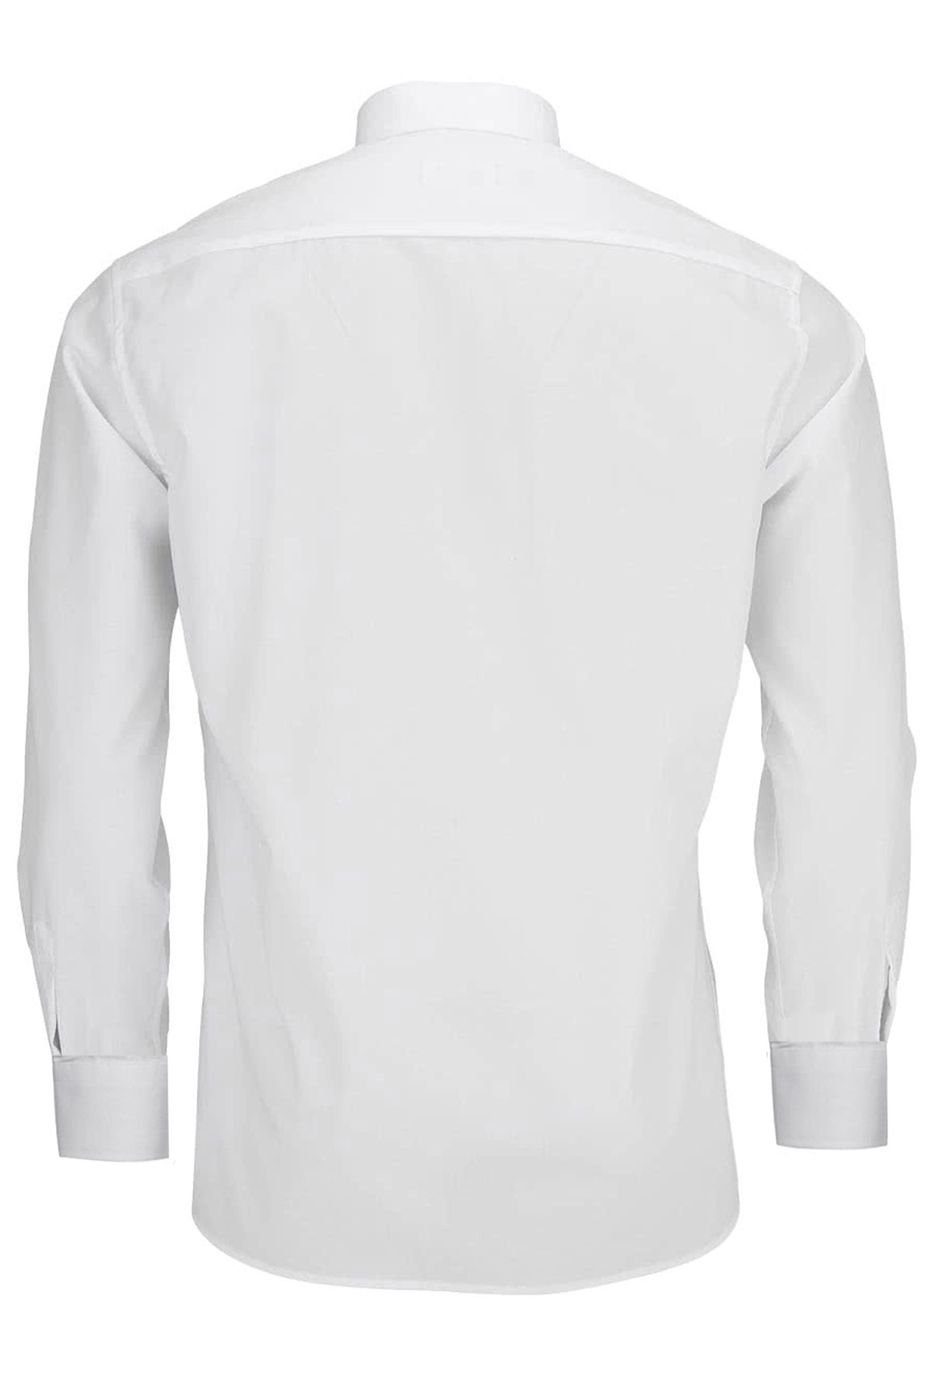 German Wear Trachtenhemd GW1253 aus Trachtenhemd Hemd Baumwolle edelweiß bestickt